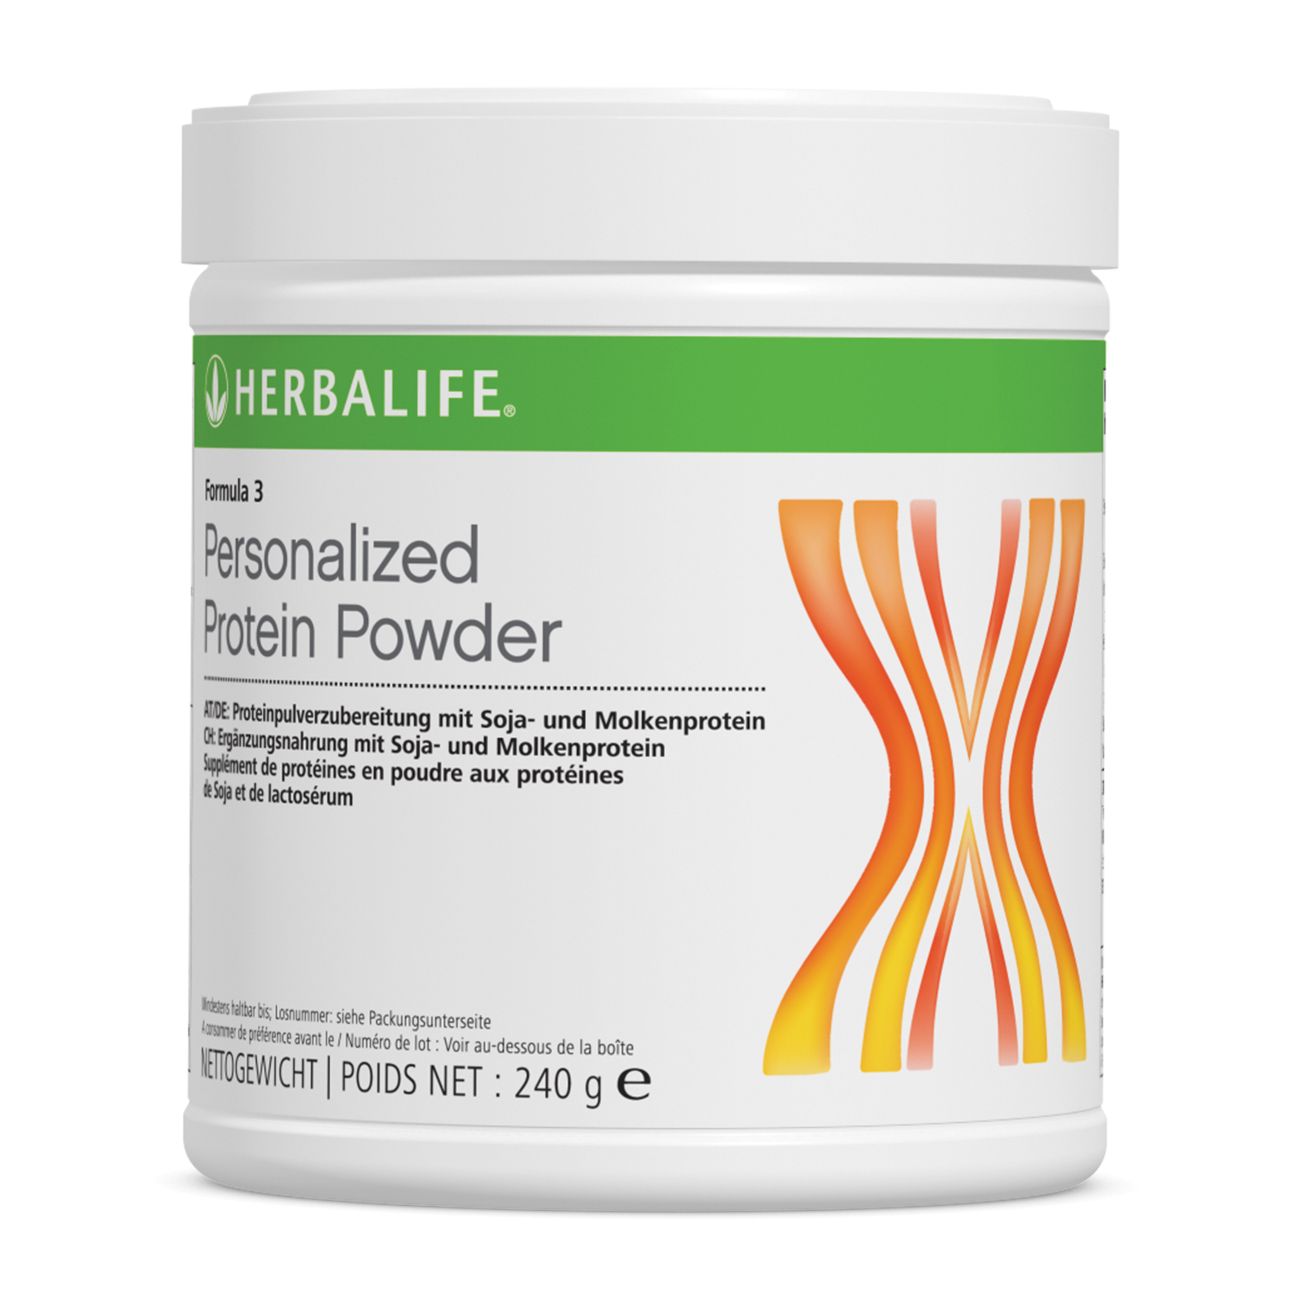 Formula 3 – Personalized Protein Powder Original